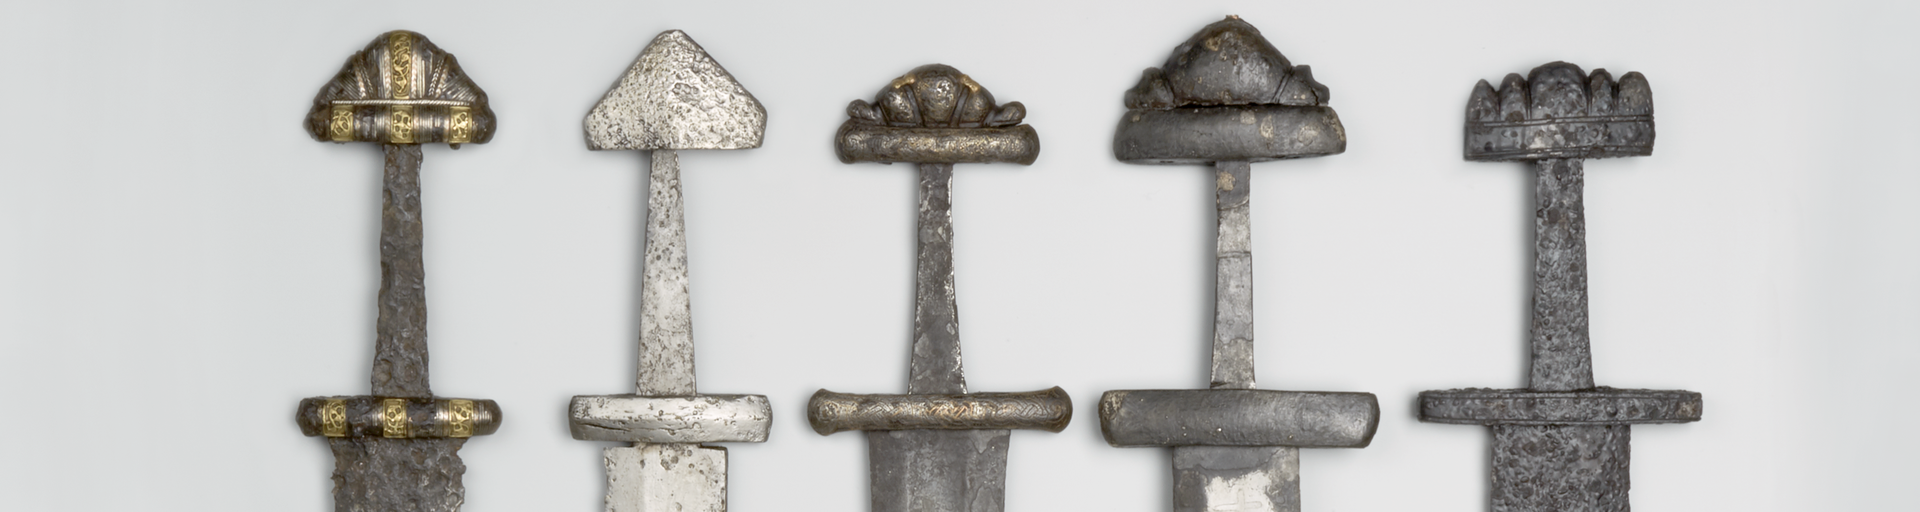 Row of viking age swords.